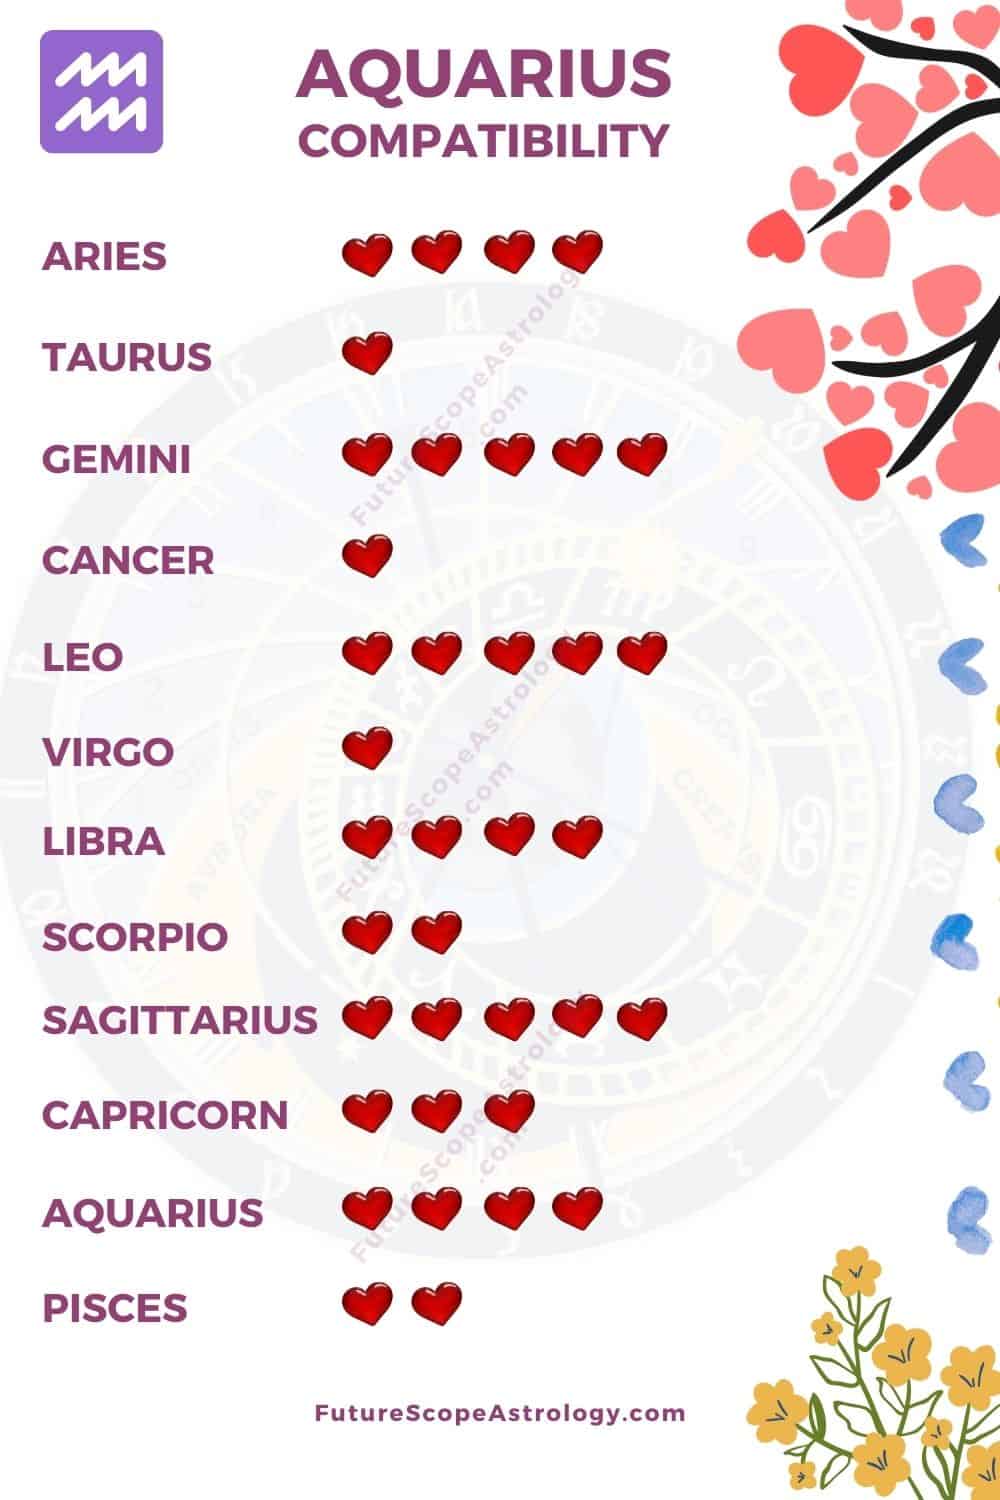 Aquarius Love Compatibility Chart Bobs And Vagene - Reverasite